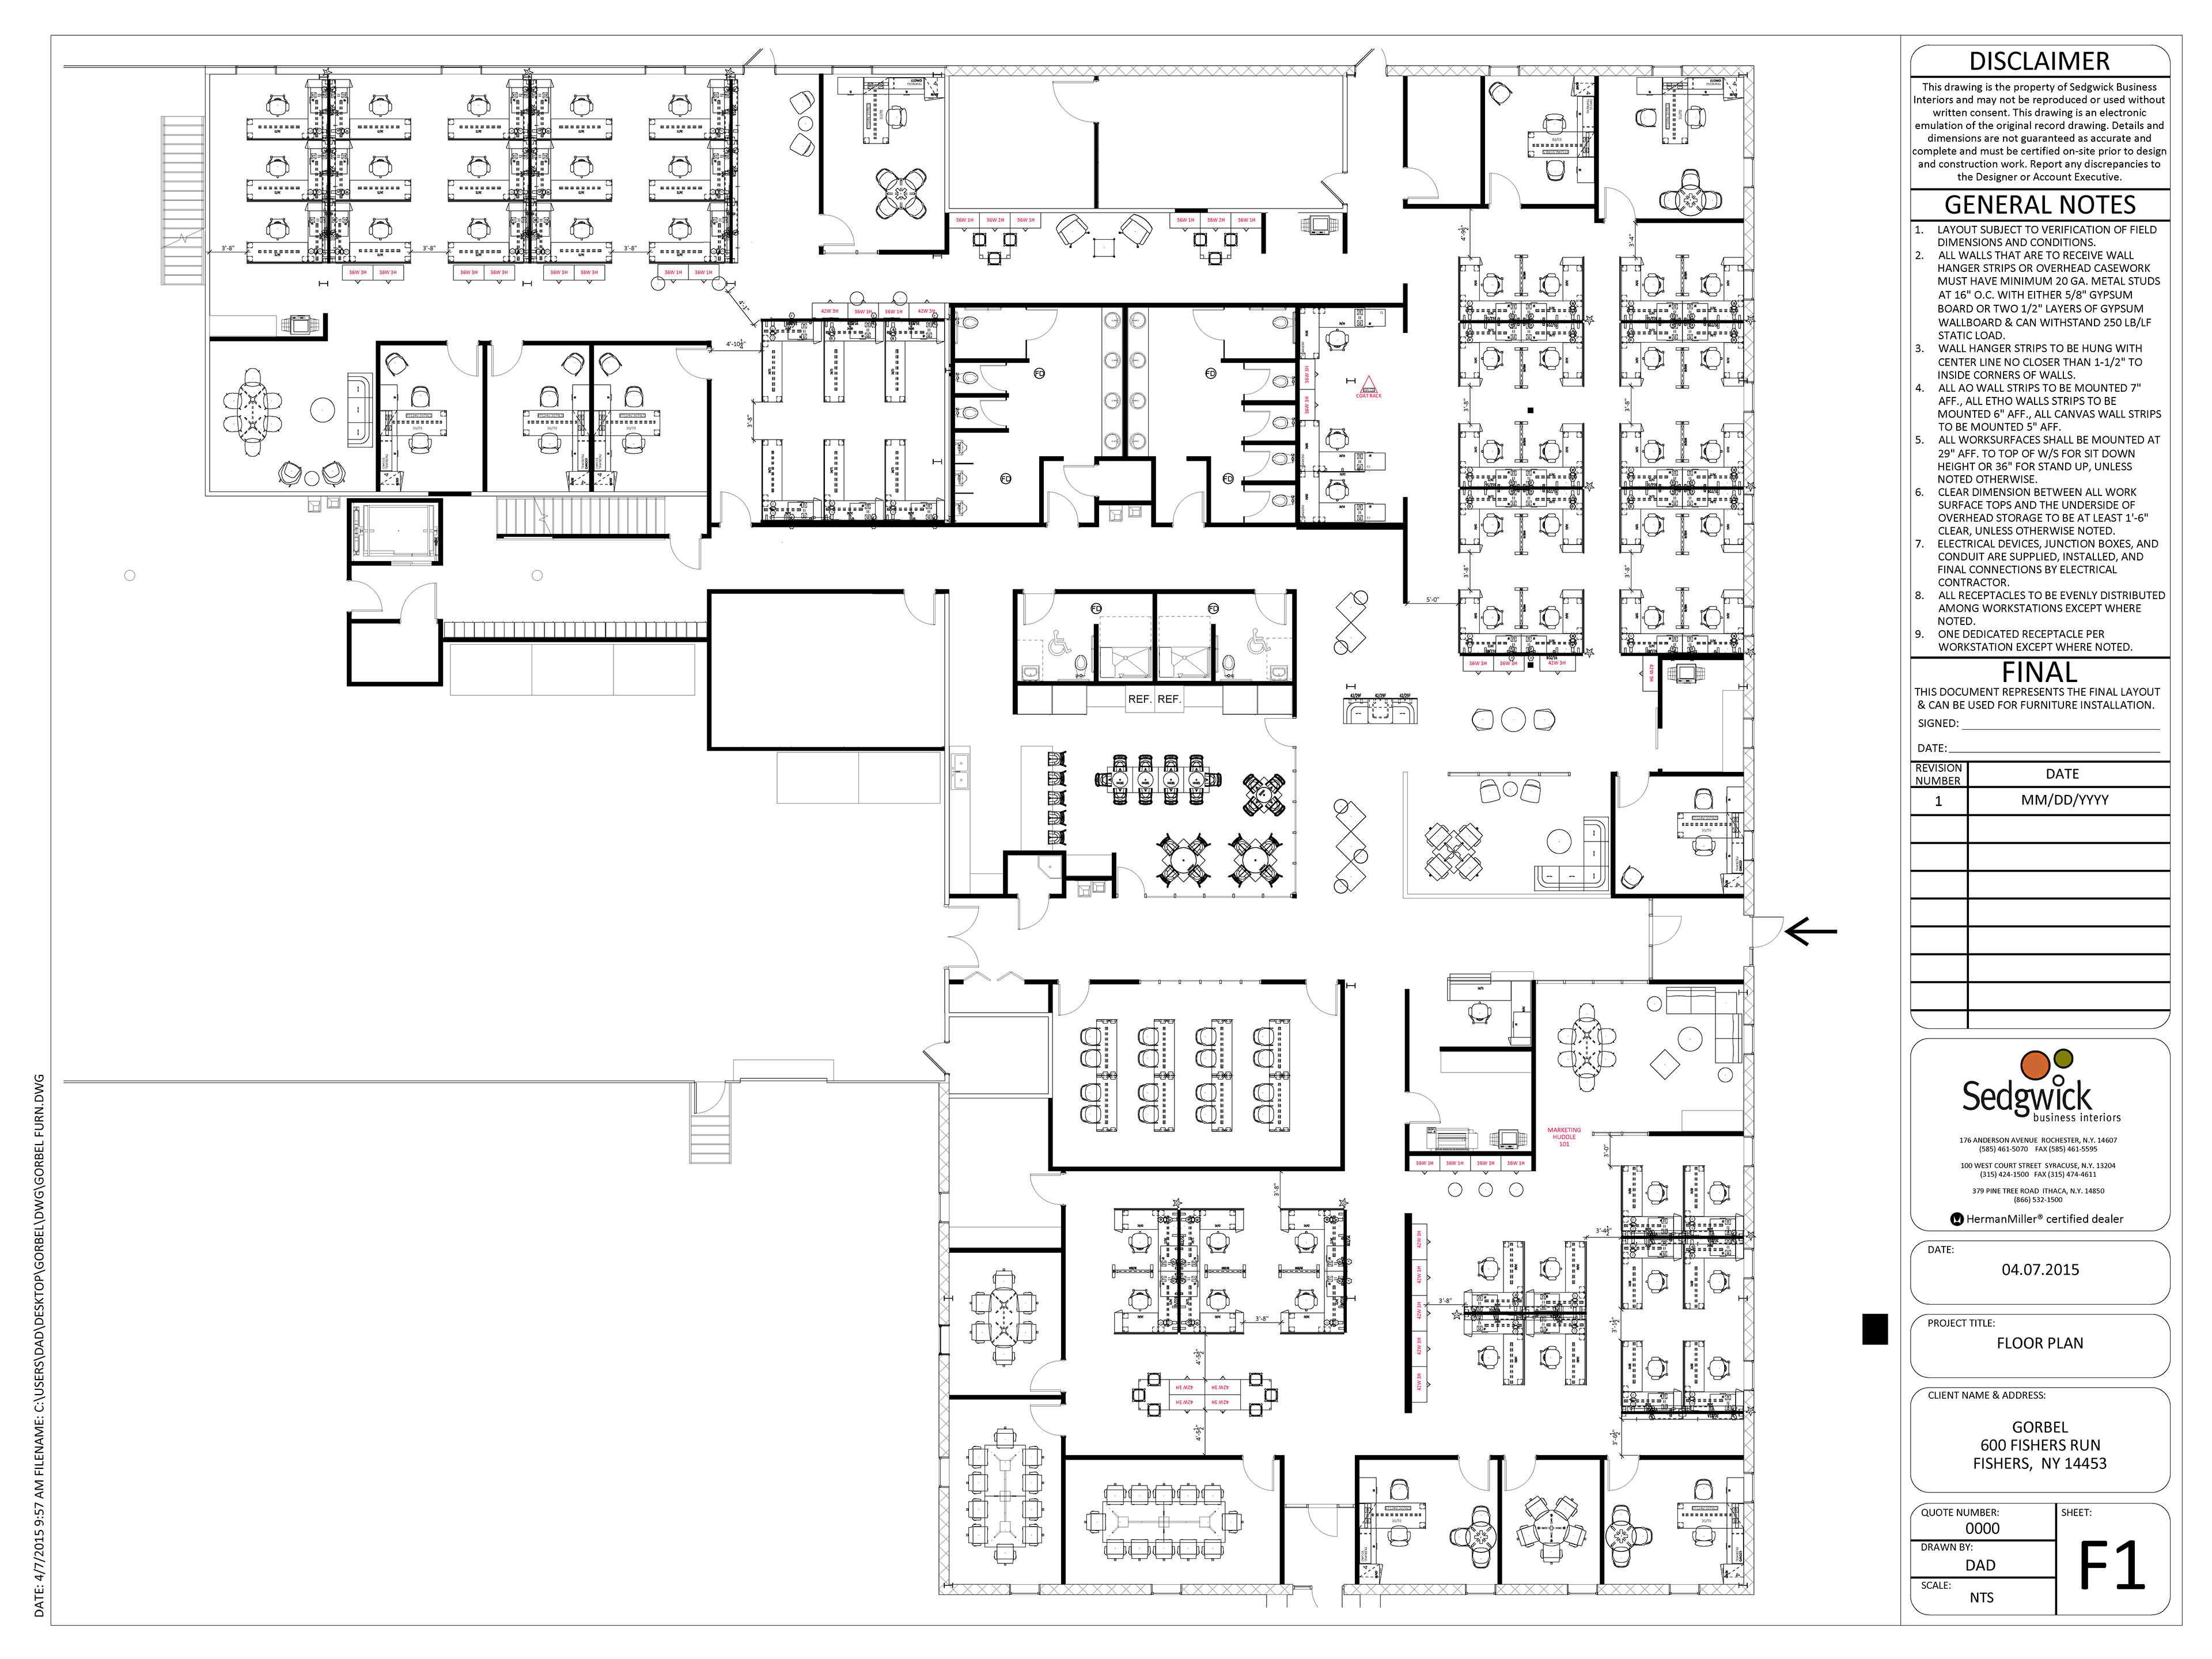 David Dangelantonio Gorbel Proposed Floor Plan